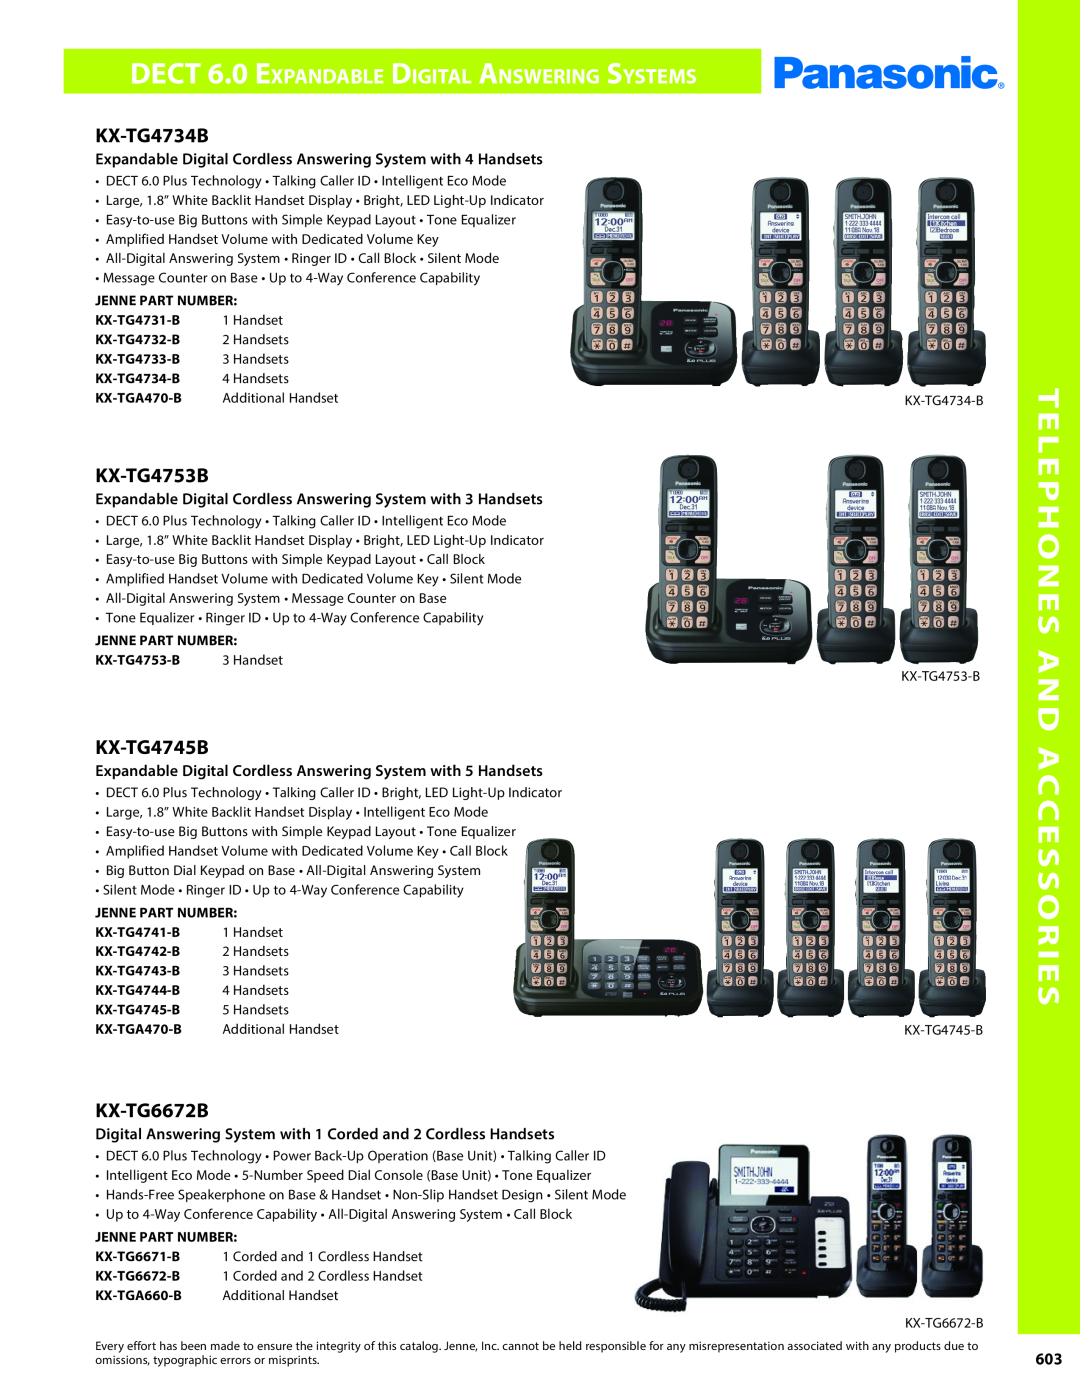 Panasonic PMPU2000 manual Telephones And Accessories, DECT 6.0 Expandable Digital Answering Systems, KX-TG4734B, KX-TG4753B 